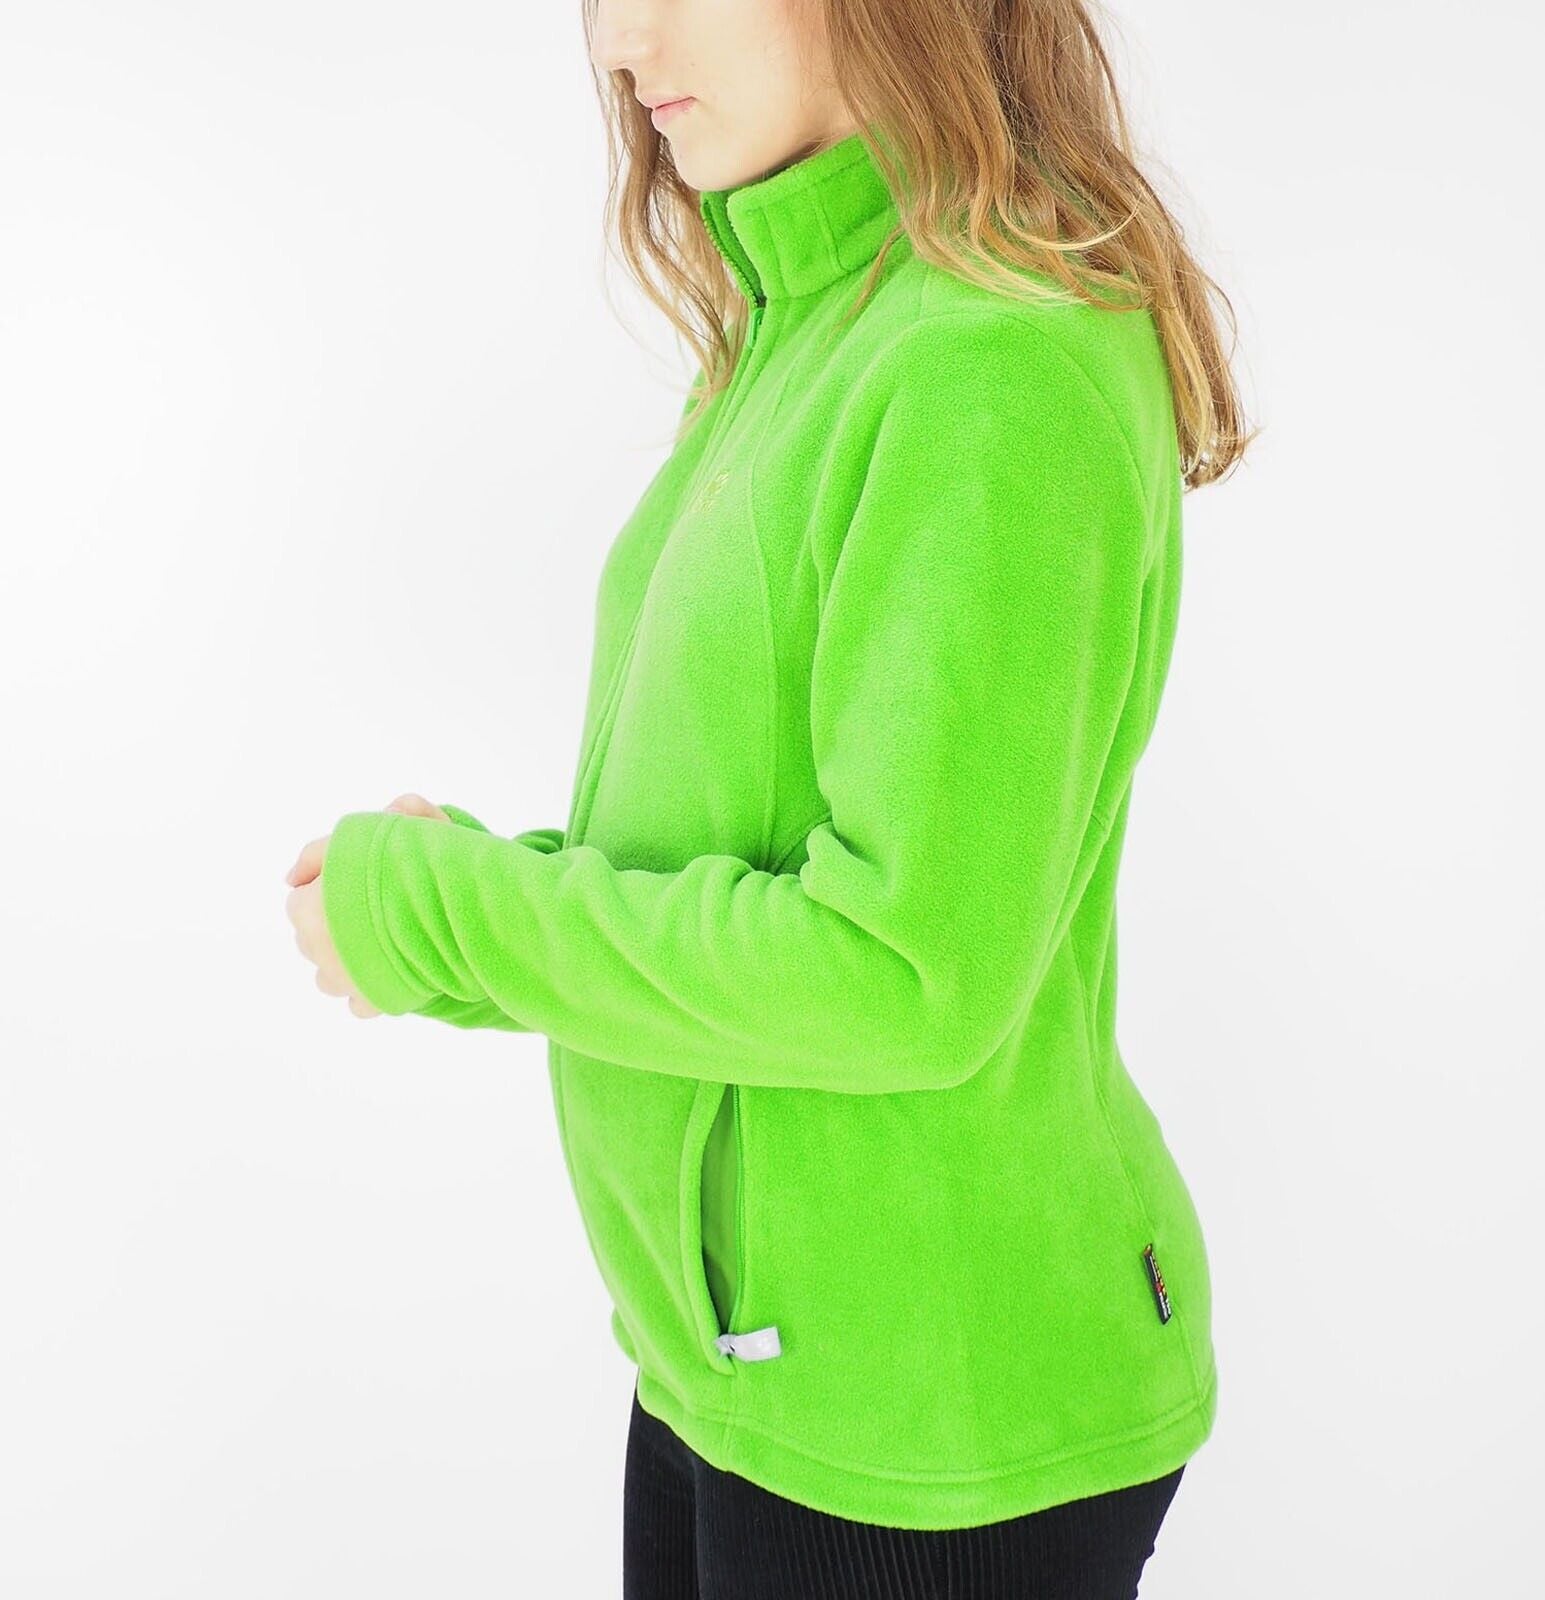 Womens Jack Wolfskin Moonlight 1701781 Basil Green Zip Up Warm Fleece Sweatshirt